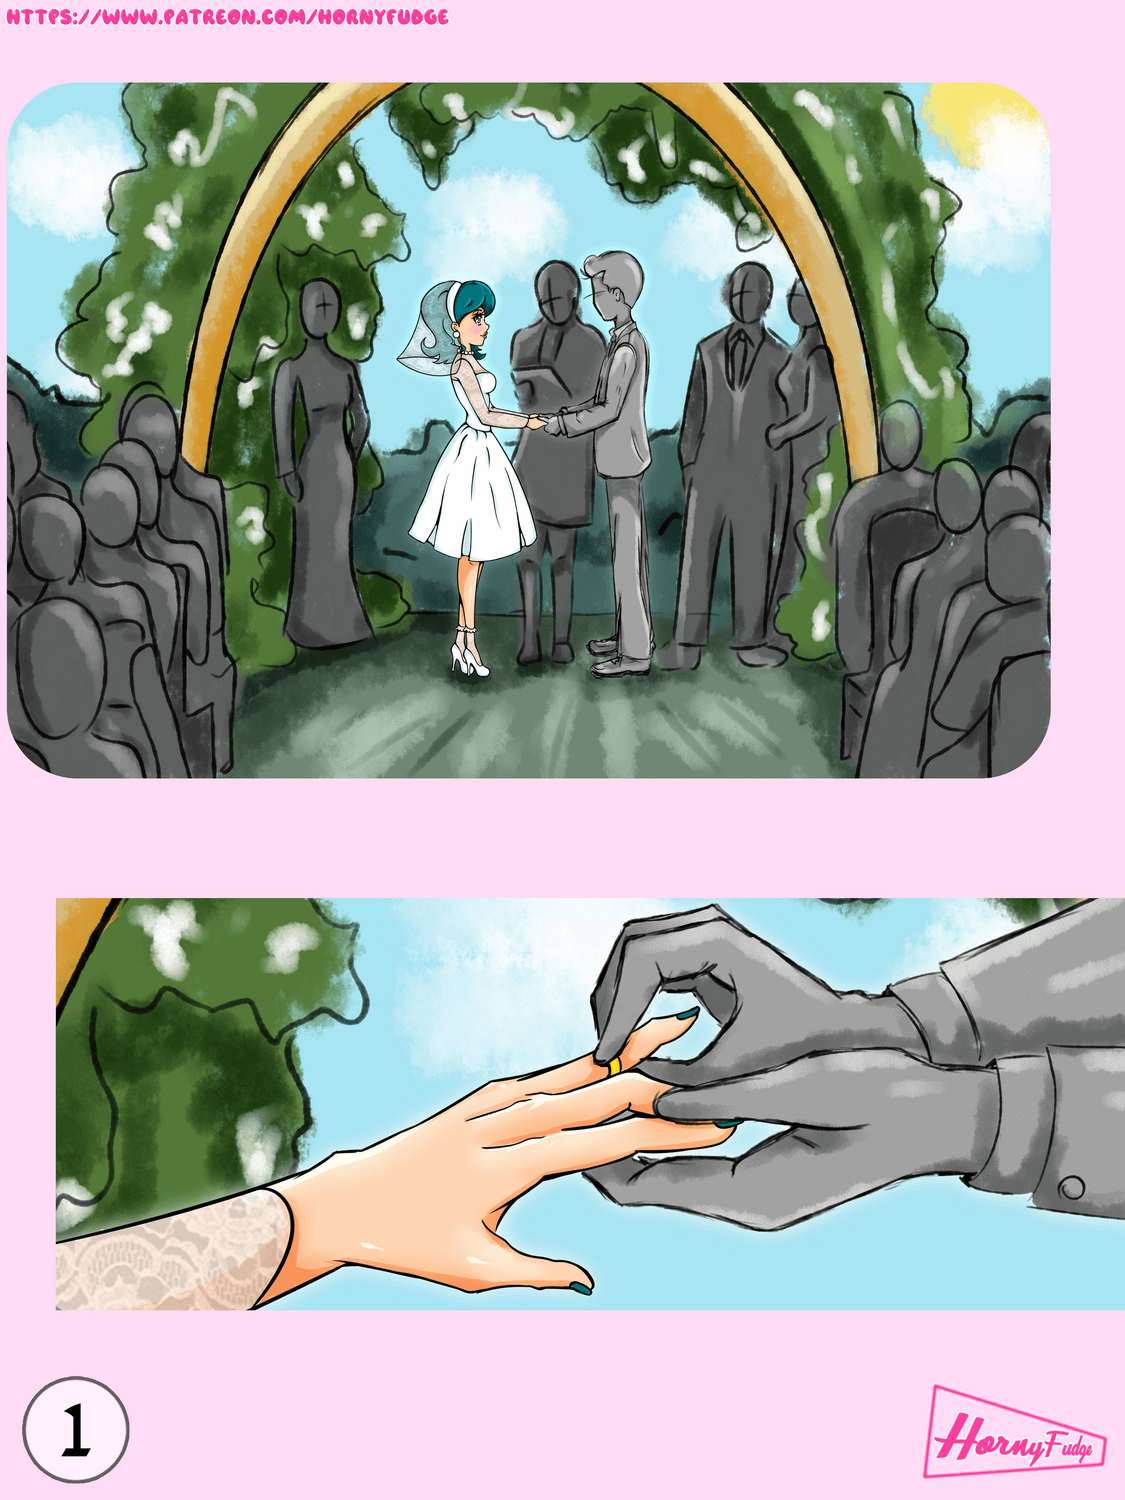 Bride Sex Toons - Stepford Wife Wedding - Sex Comics, Cartoon Porn, Adult Anime & Hentai Manga